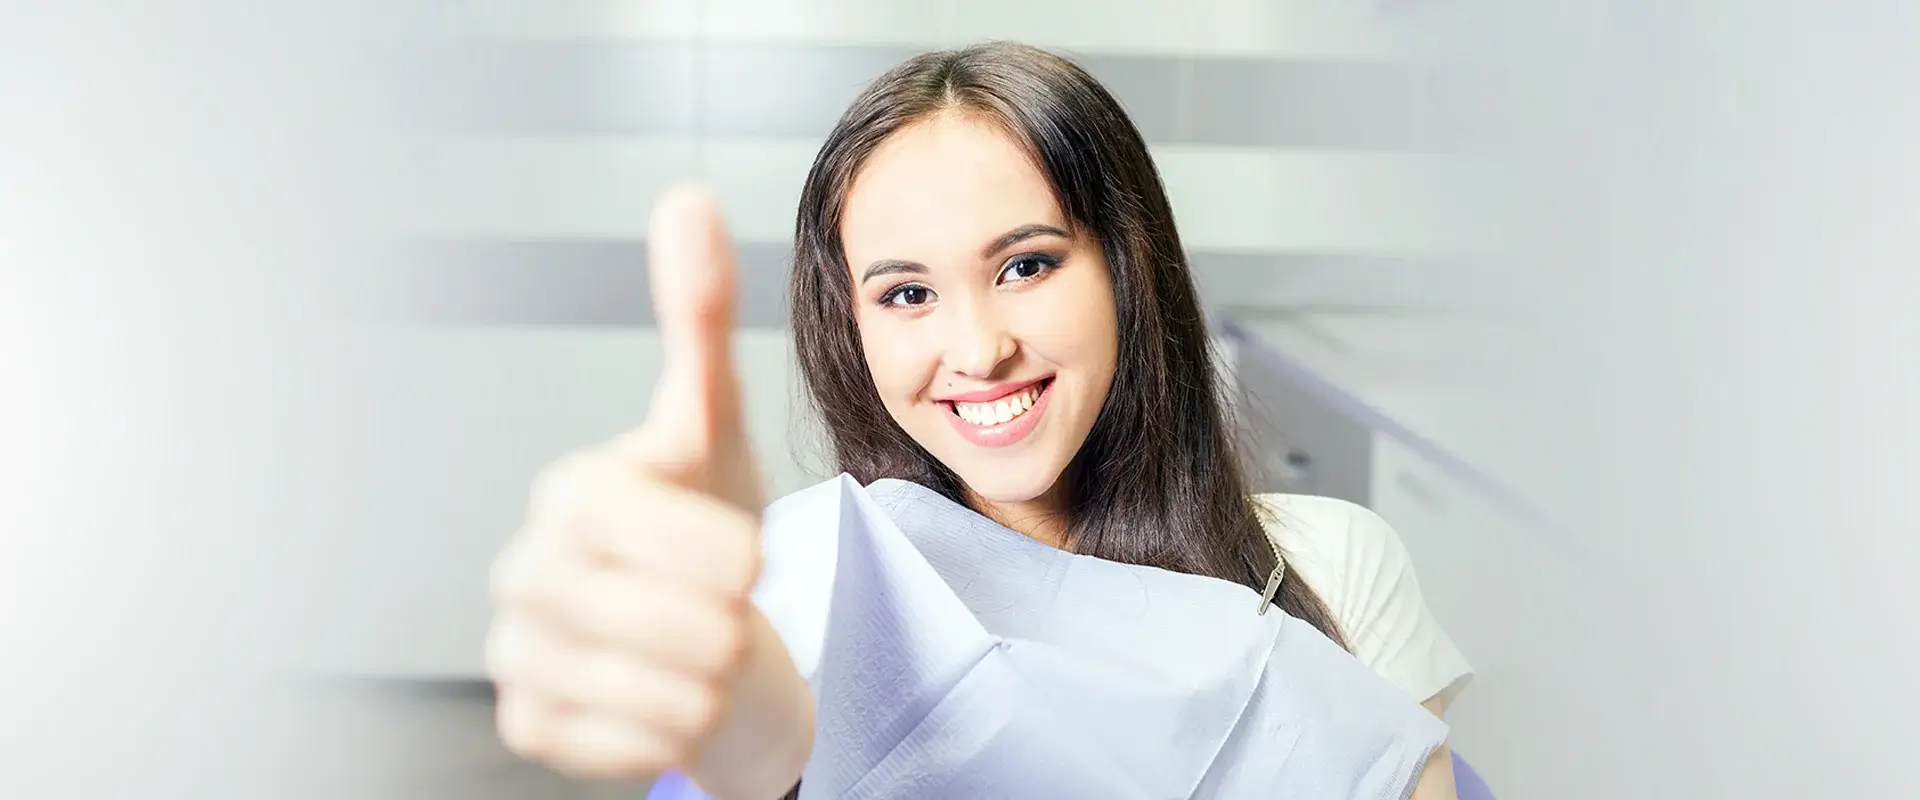 Quality dental care Clinic